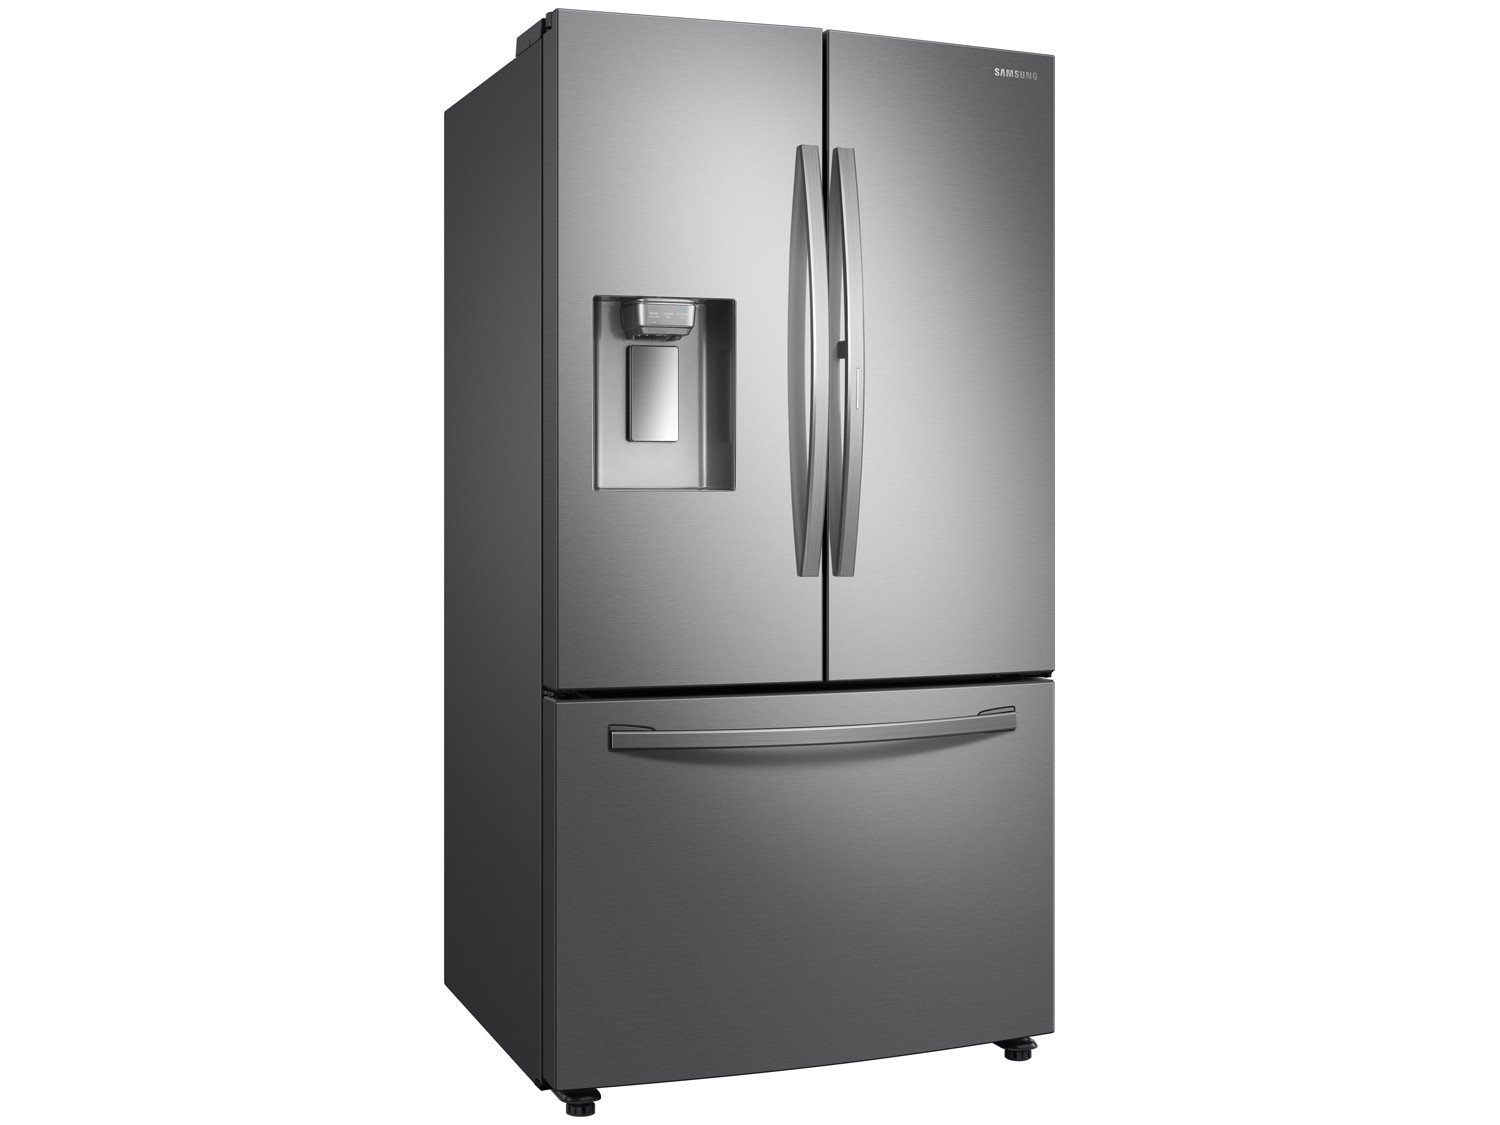 Refrigerador Samsung Inverter French Door RF23R6301SR/AZ com Twin Cooling Plus e SmartThings (Wi-Fi) Inox - 530L - 220v - 2